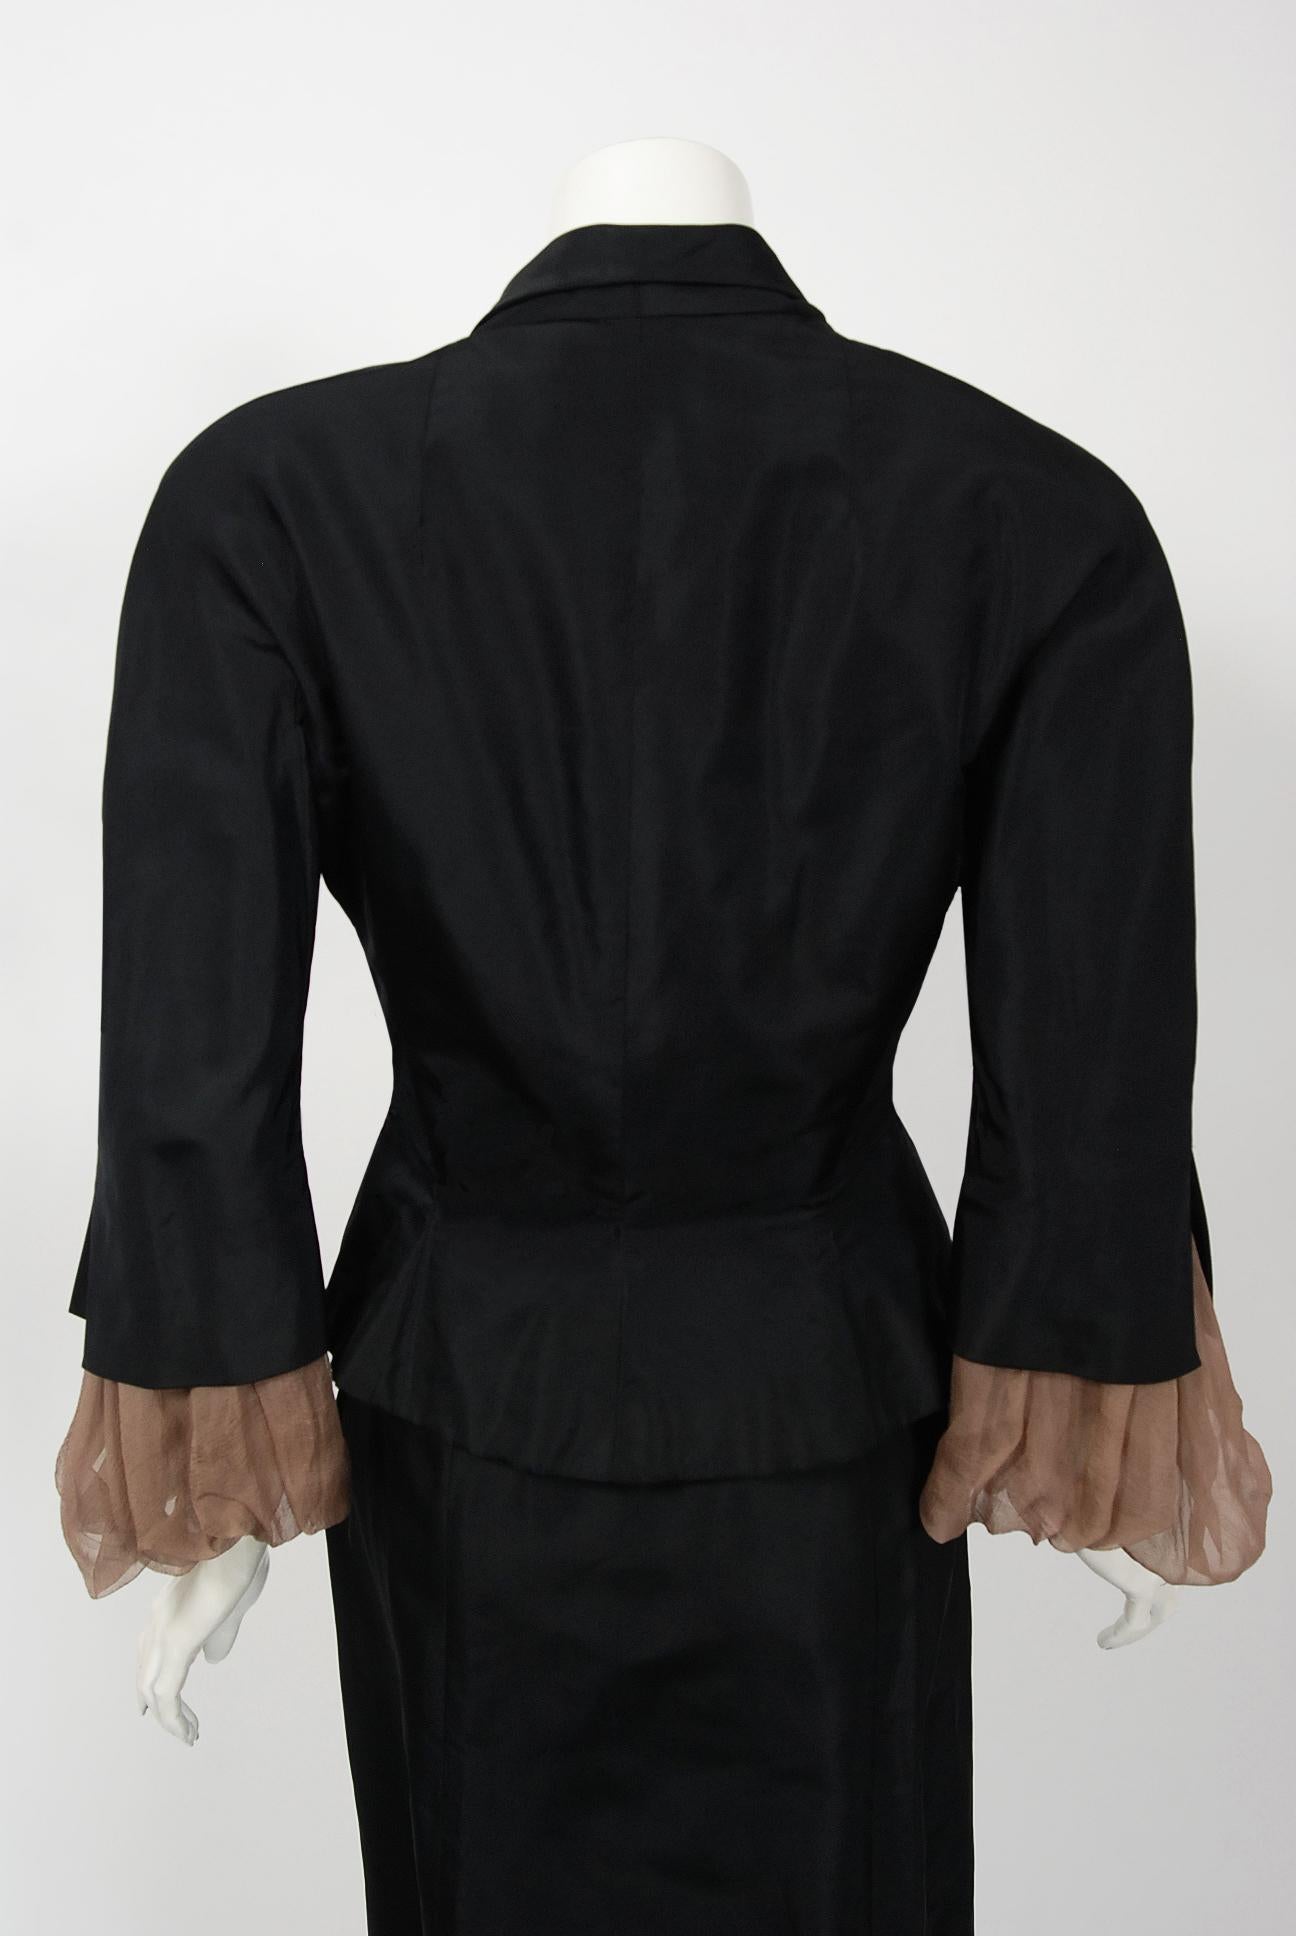 Vintage 1950s Pierre Balmain Black and Nude Silk Dress w/ Billow-Sleeve Jacket  4